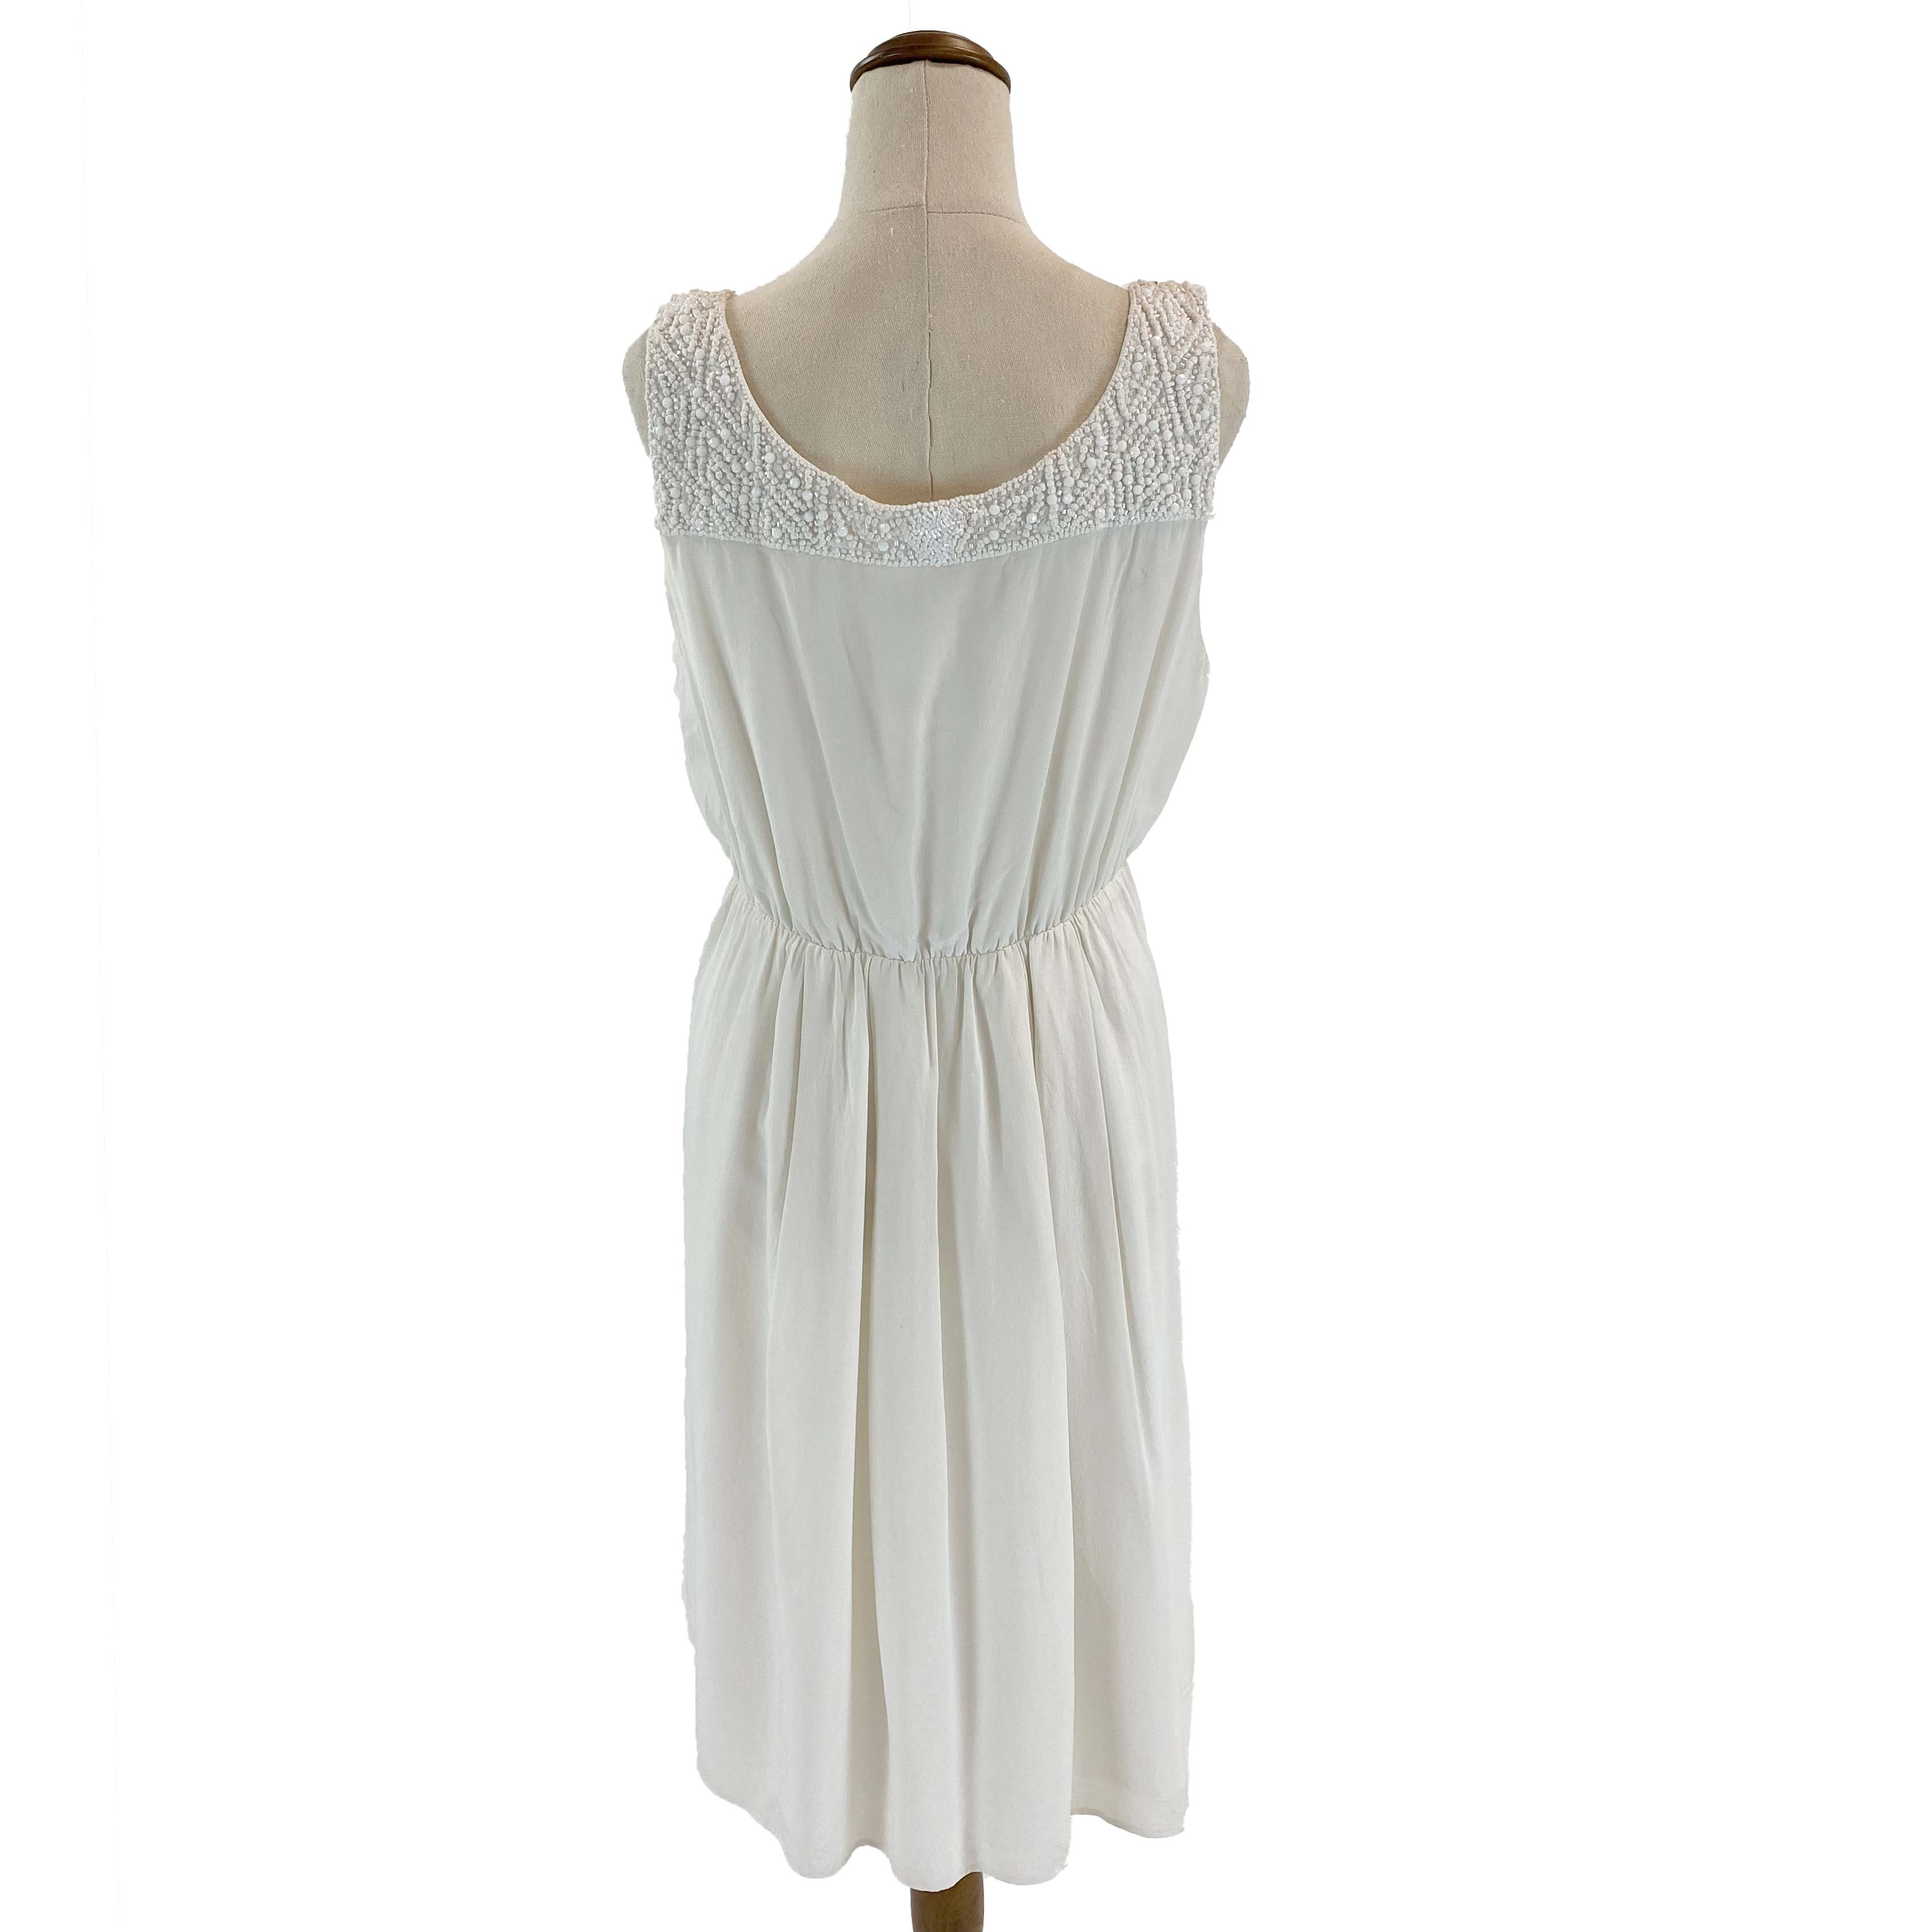 Club Monaco - White Dress